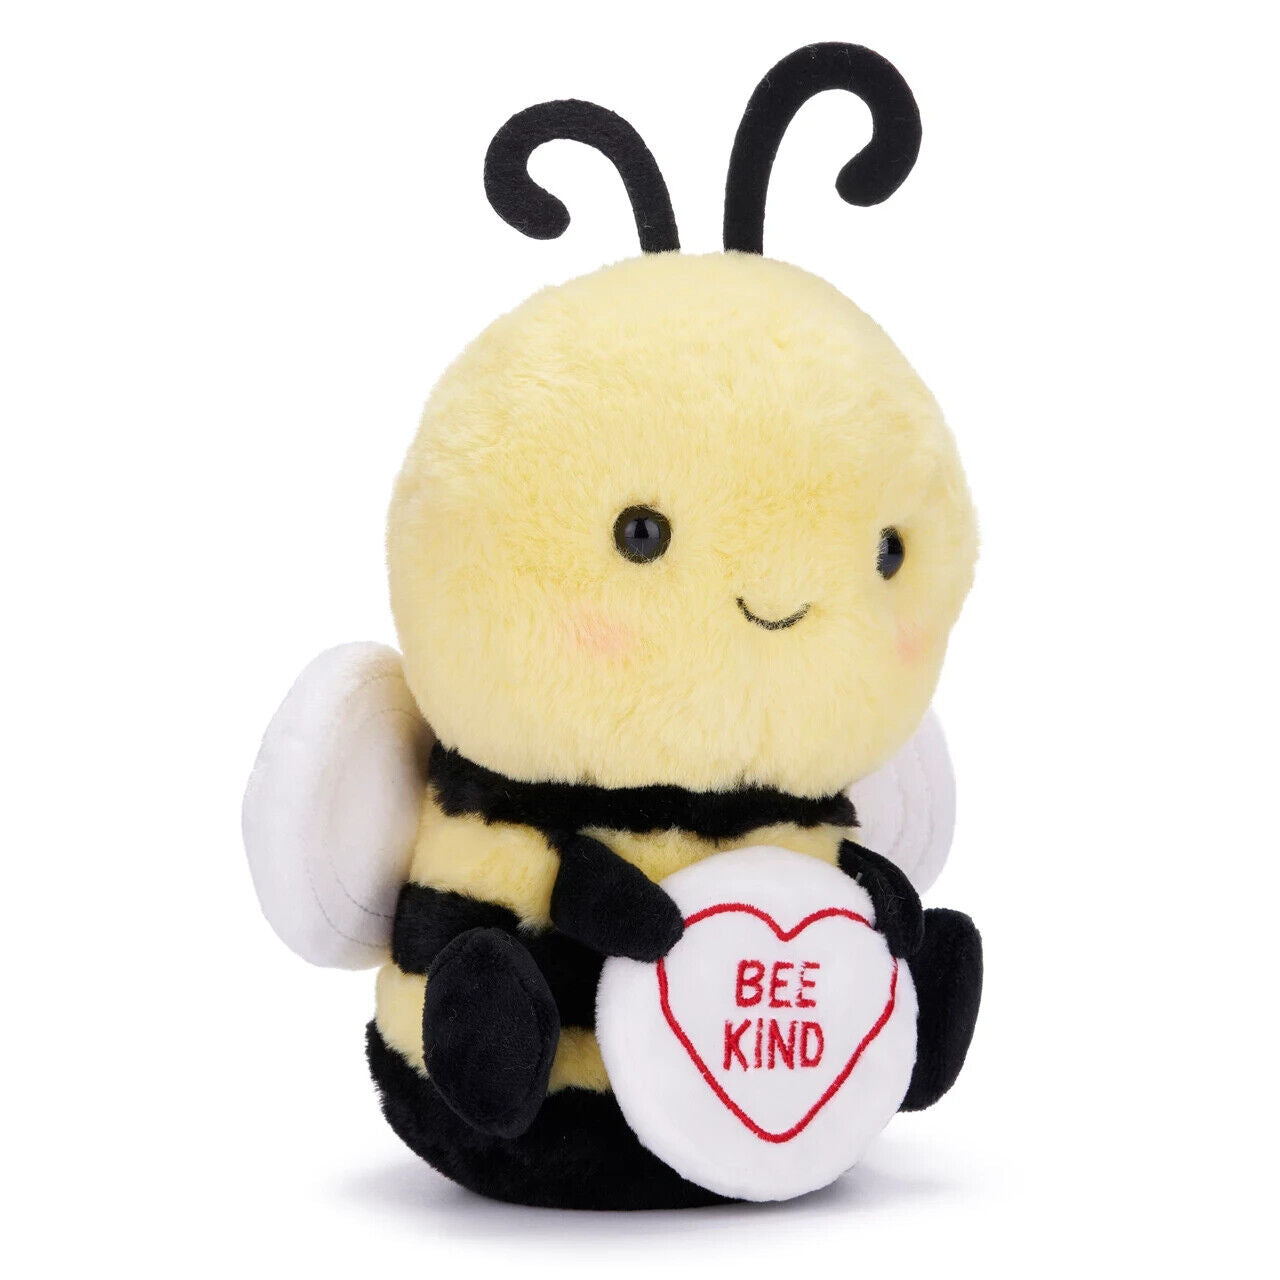 Bee Swizzels Love Hearts 18cm Plush Toy - Bee Kind Teddy - Soft & Cuddly